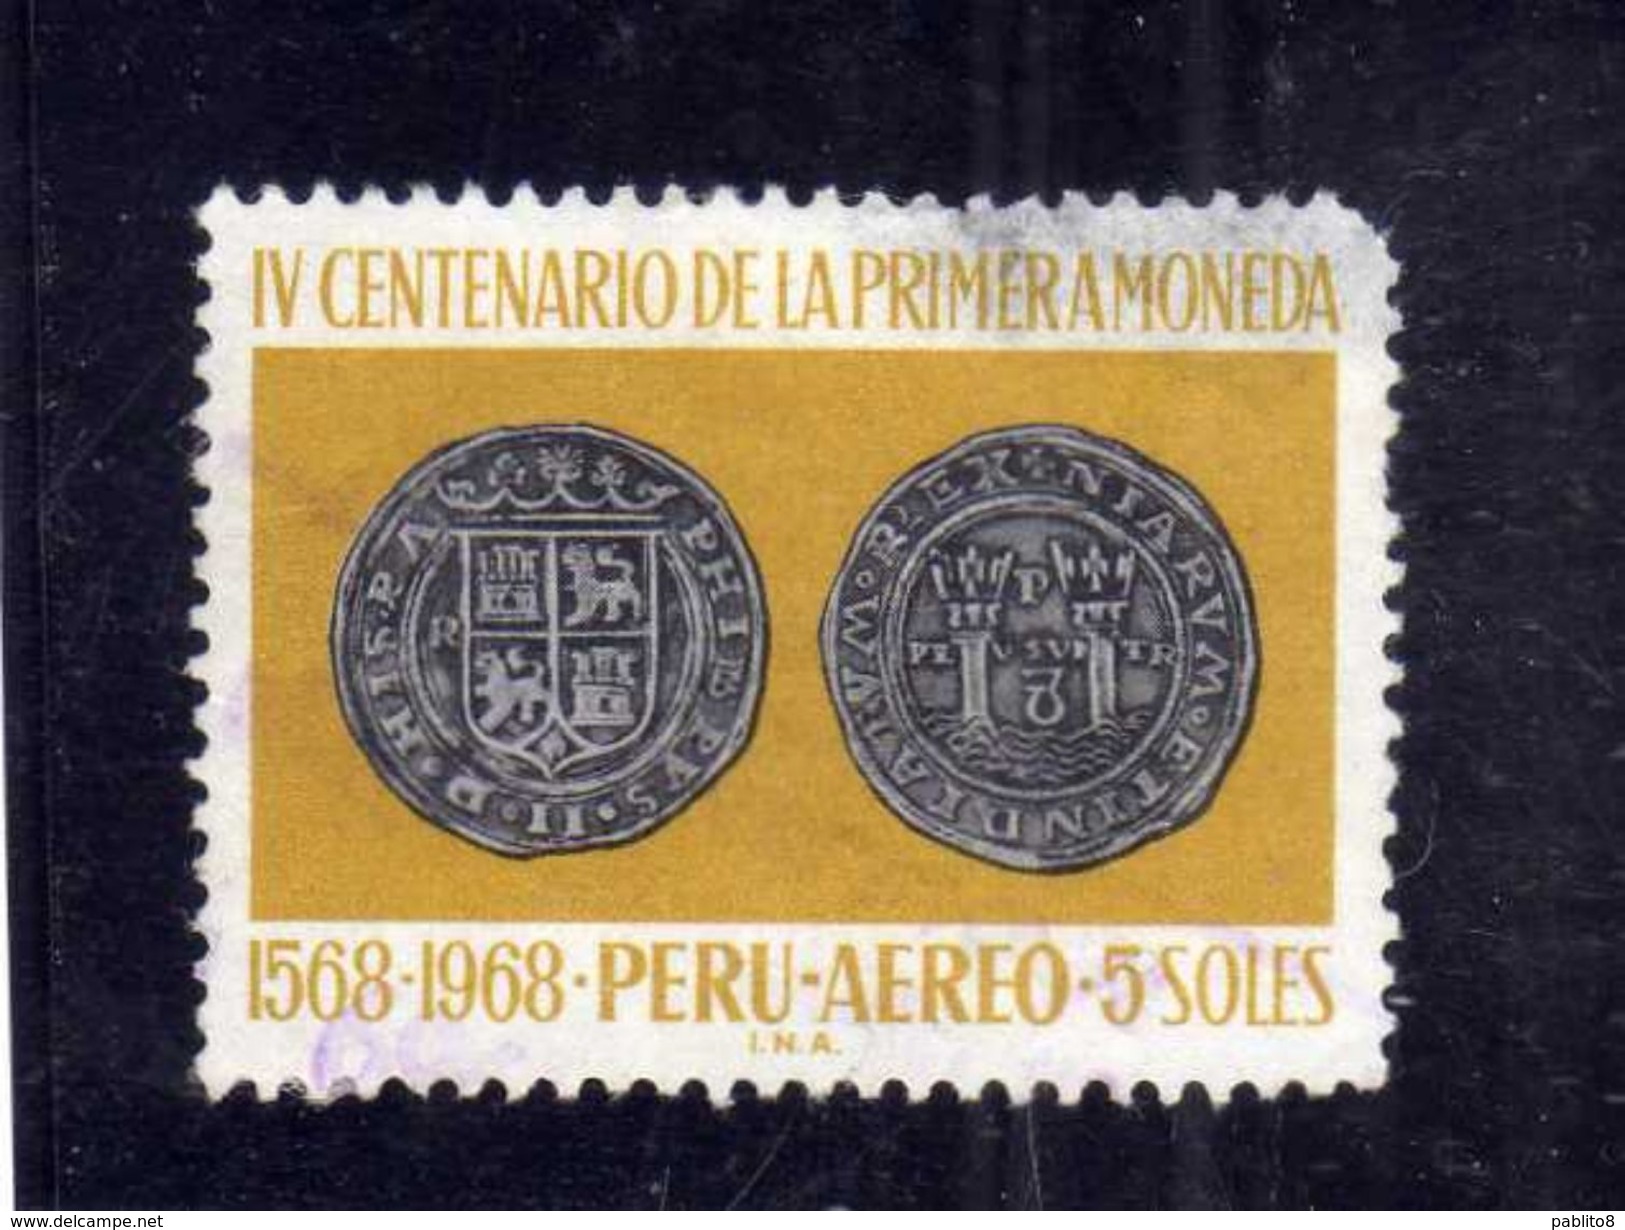 PERU' 1969 AIR MAIL POSTA AEREA First Peruvian Coinage SILVER COIN SOL 5s USATO USED OBLITERE' - Peru